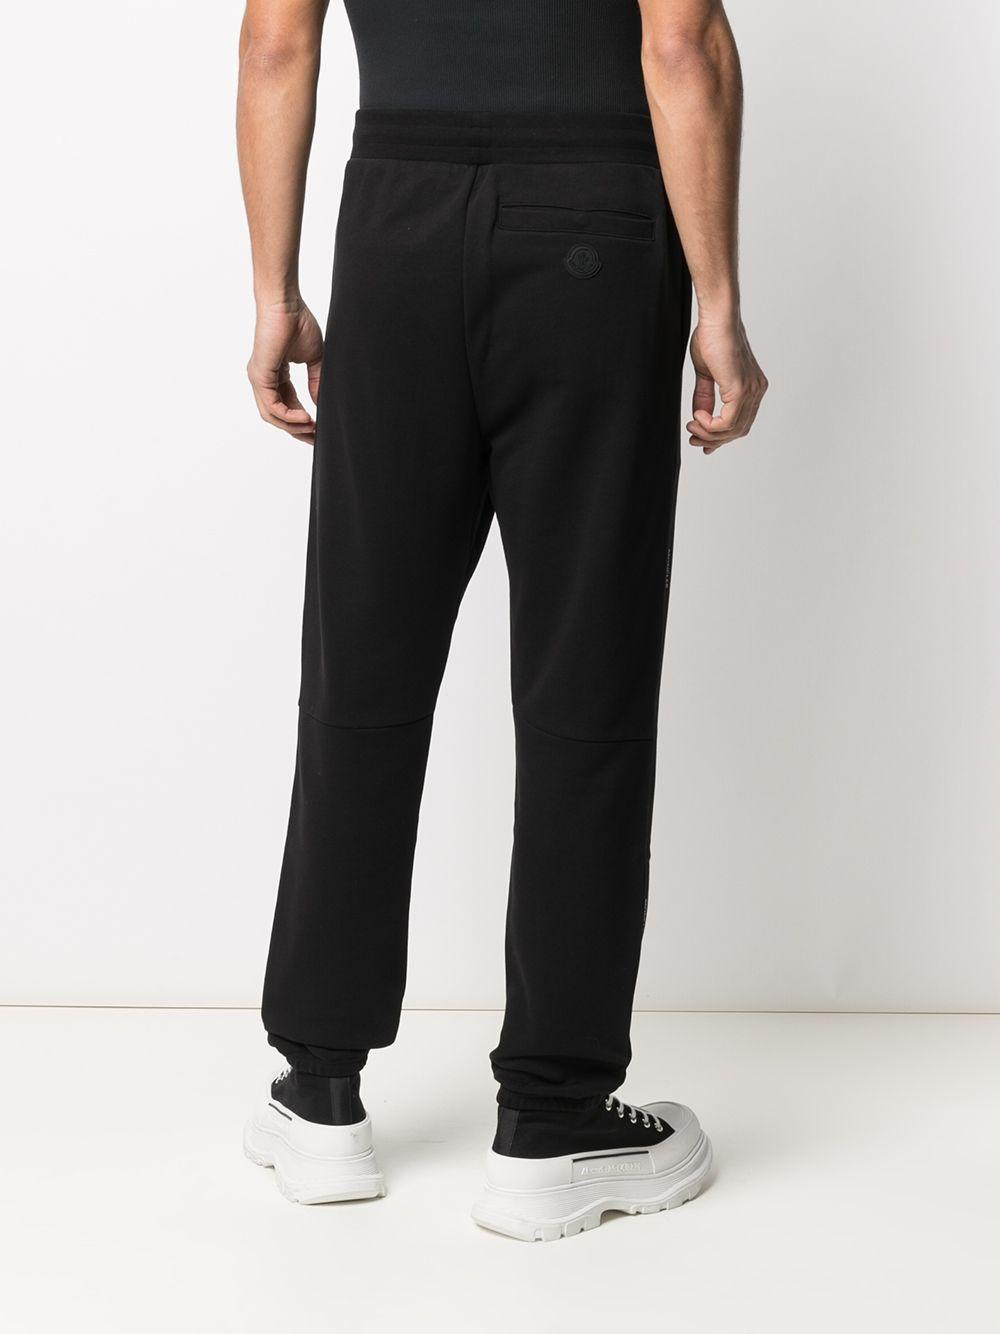 Moncler Cotton Logo-print Track Pants in Black for Men - Lyst